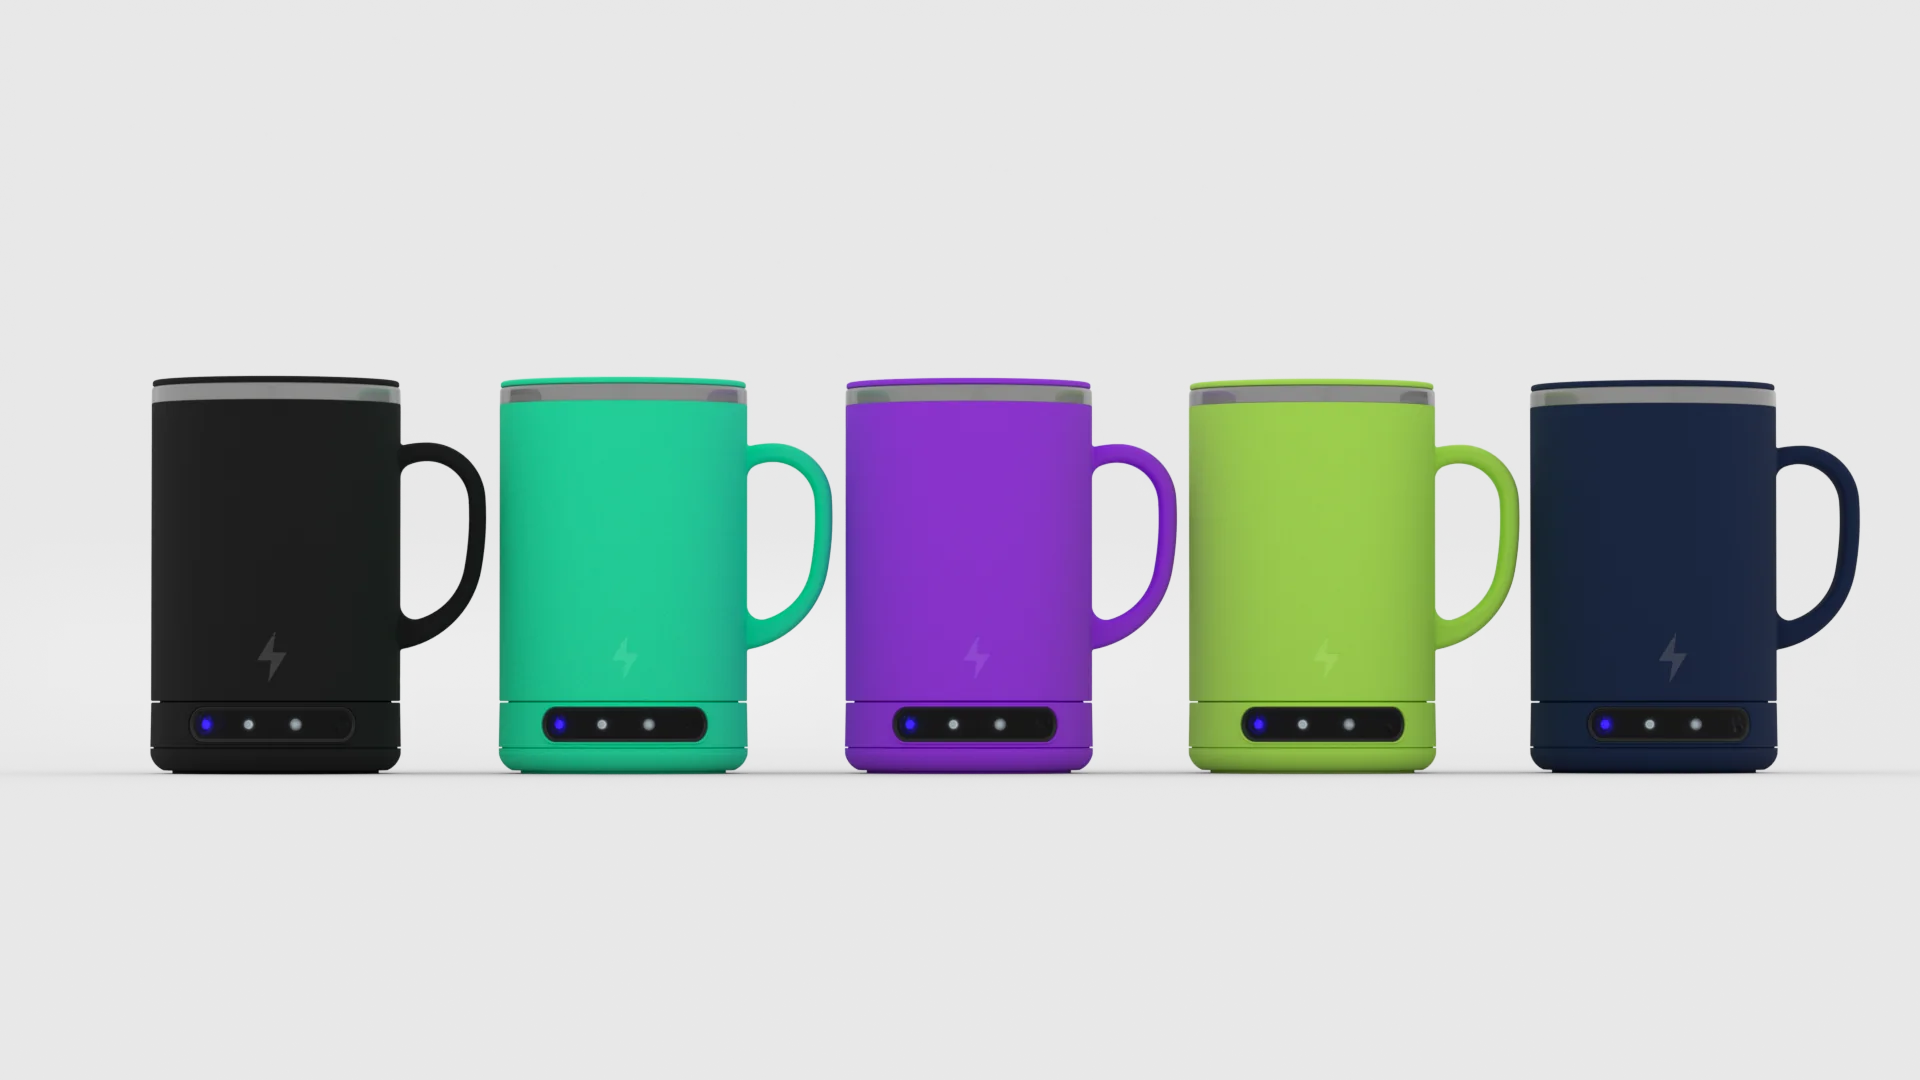 BOLT Heated Mug - The only heated mug you can put in the dishwasher – Bolt  Heated Mugs